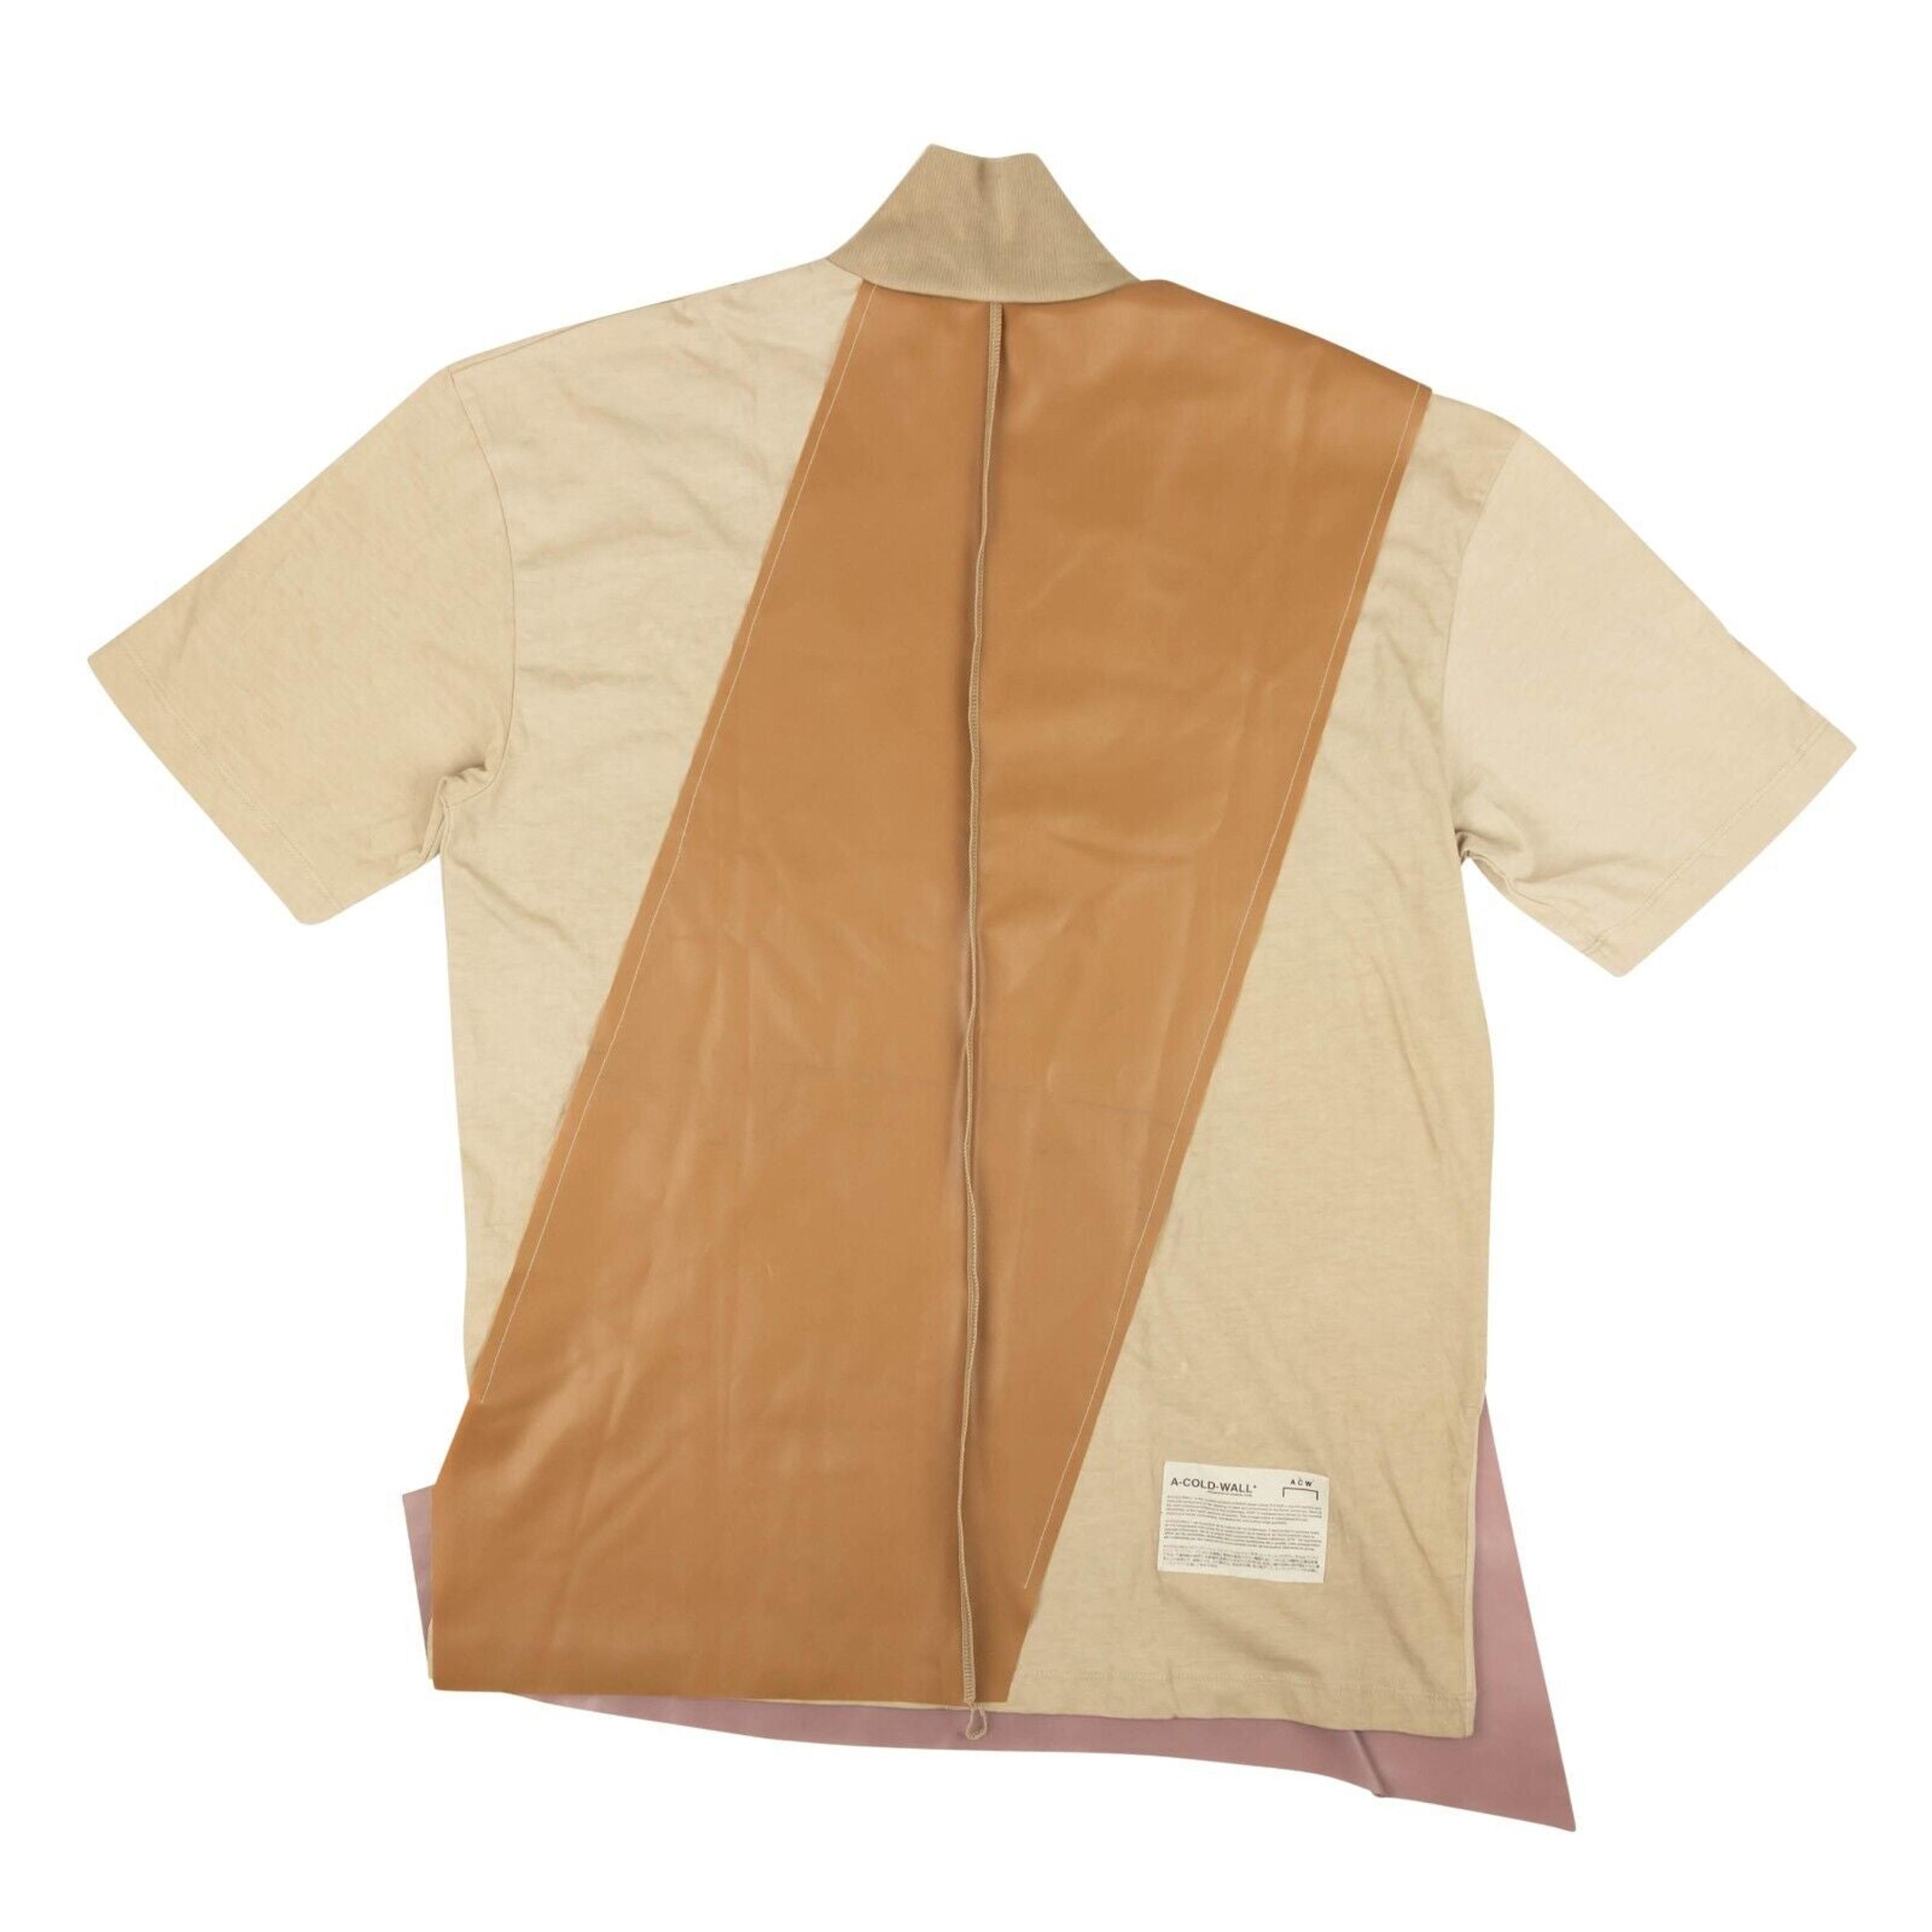 Alternate View 2 of A Plan Application Men's Brown Rubber Half Zip Shirt - Beige/Pur